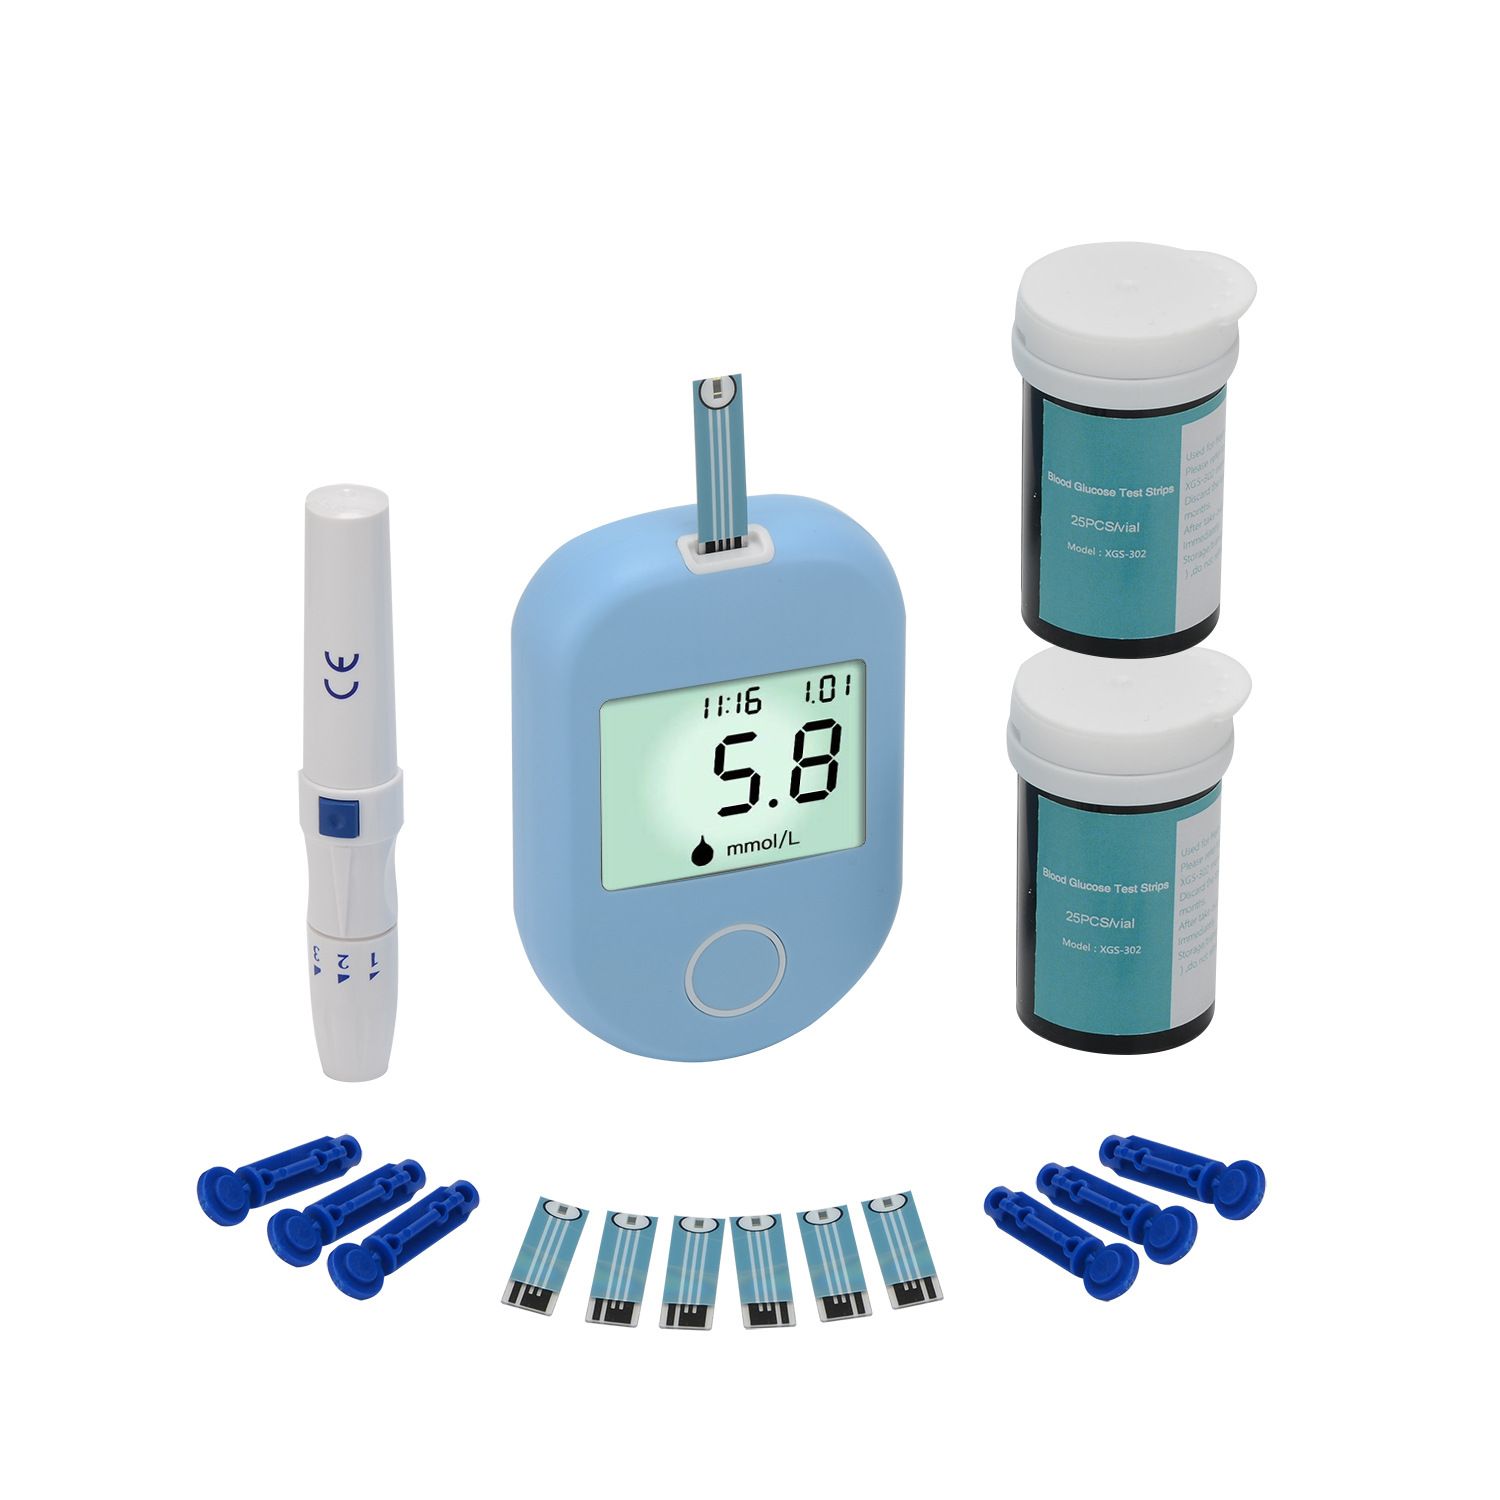 Купить аппарат для крови. Blood glucose Meter xg803. Глюкометр medico bg-202. Cell 1 аппарат для измерения крови. Глюкометр GX 803.